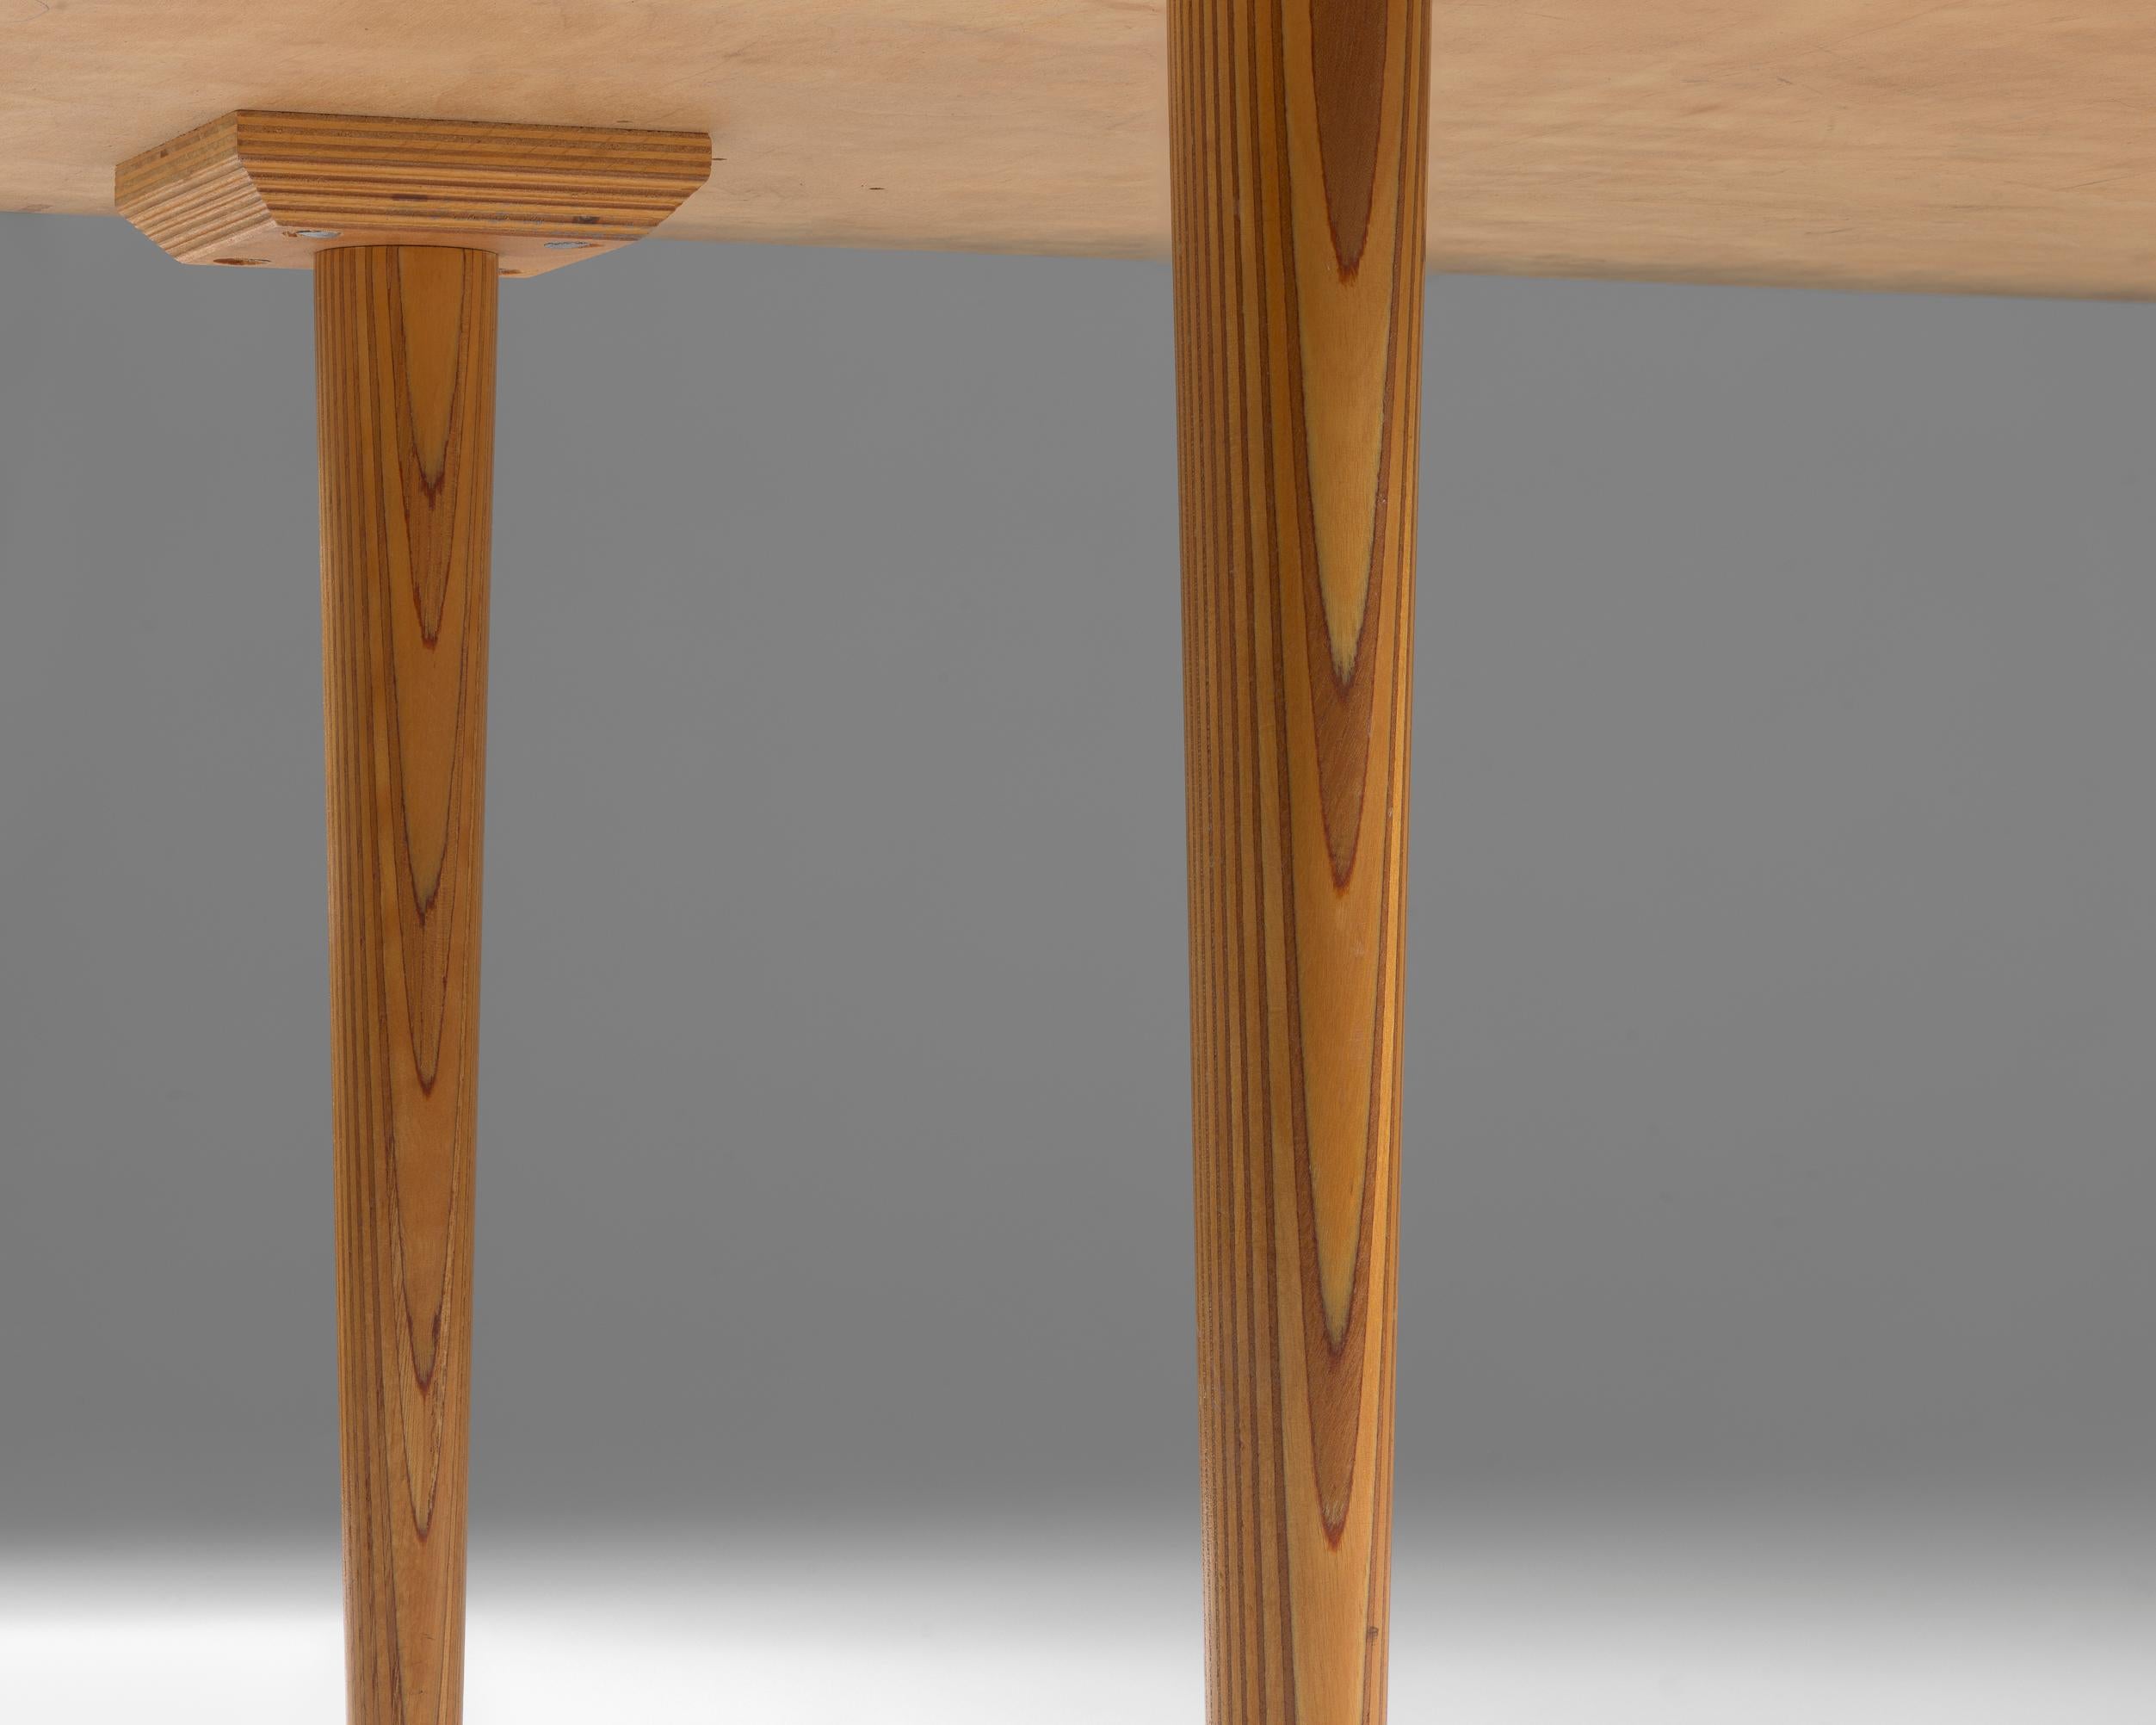 Birch Occasional Table “Rhythmic Plywood” Designed by Tapio Wirkkala for Asko, Finland